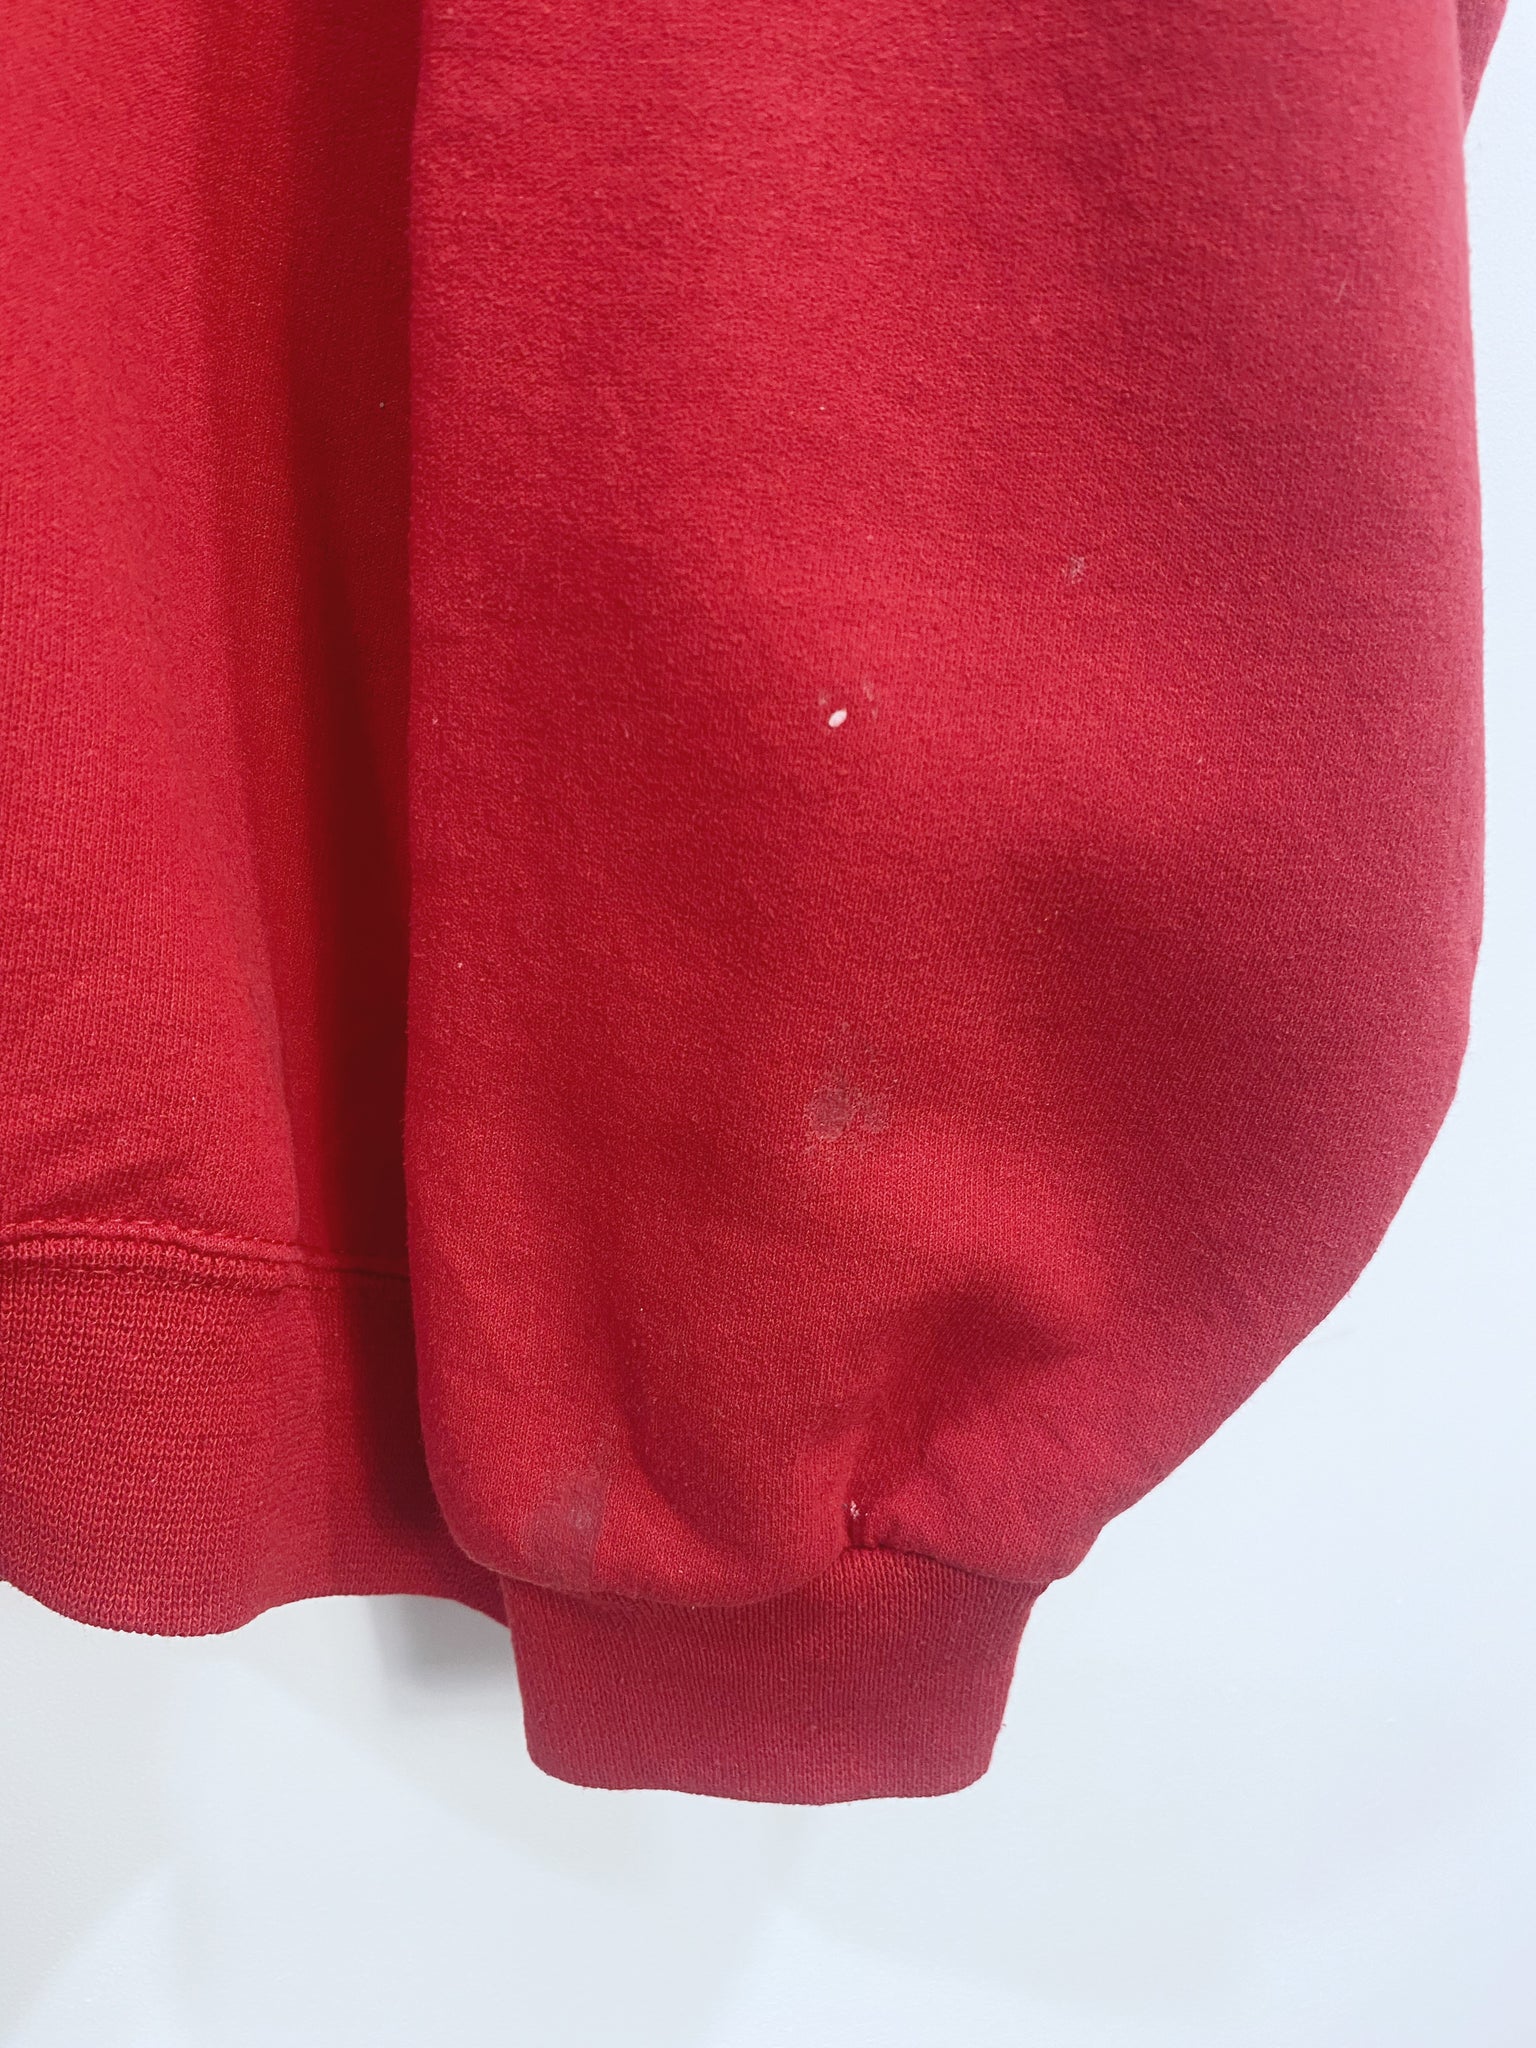 Vintage Detroit RedWings Sweatshirt XL